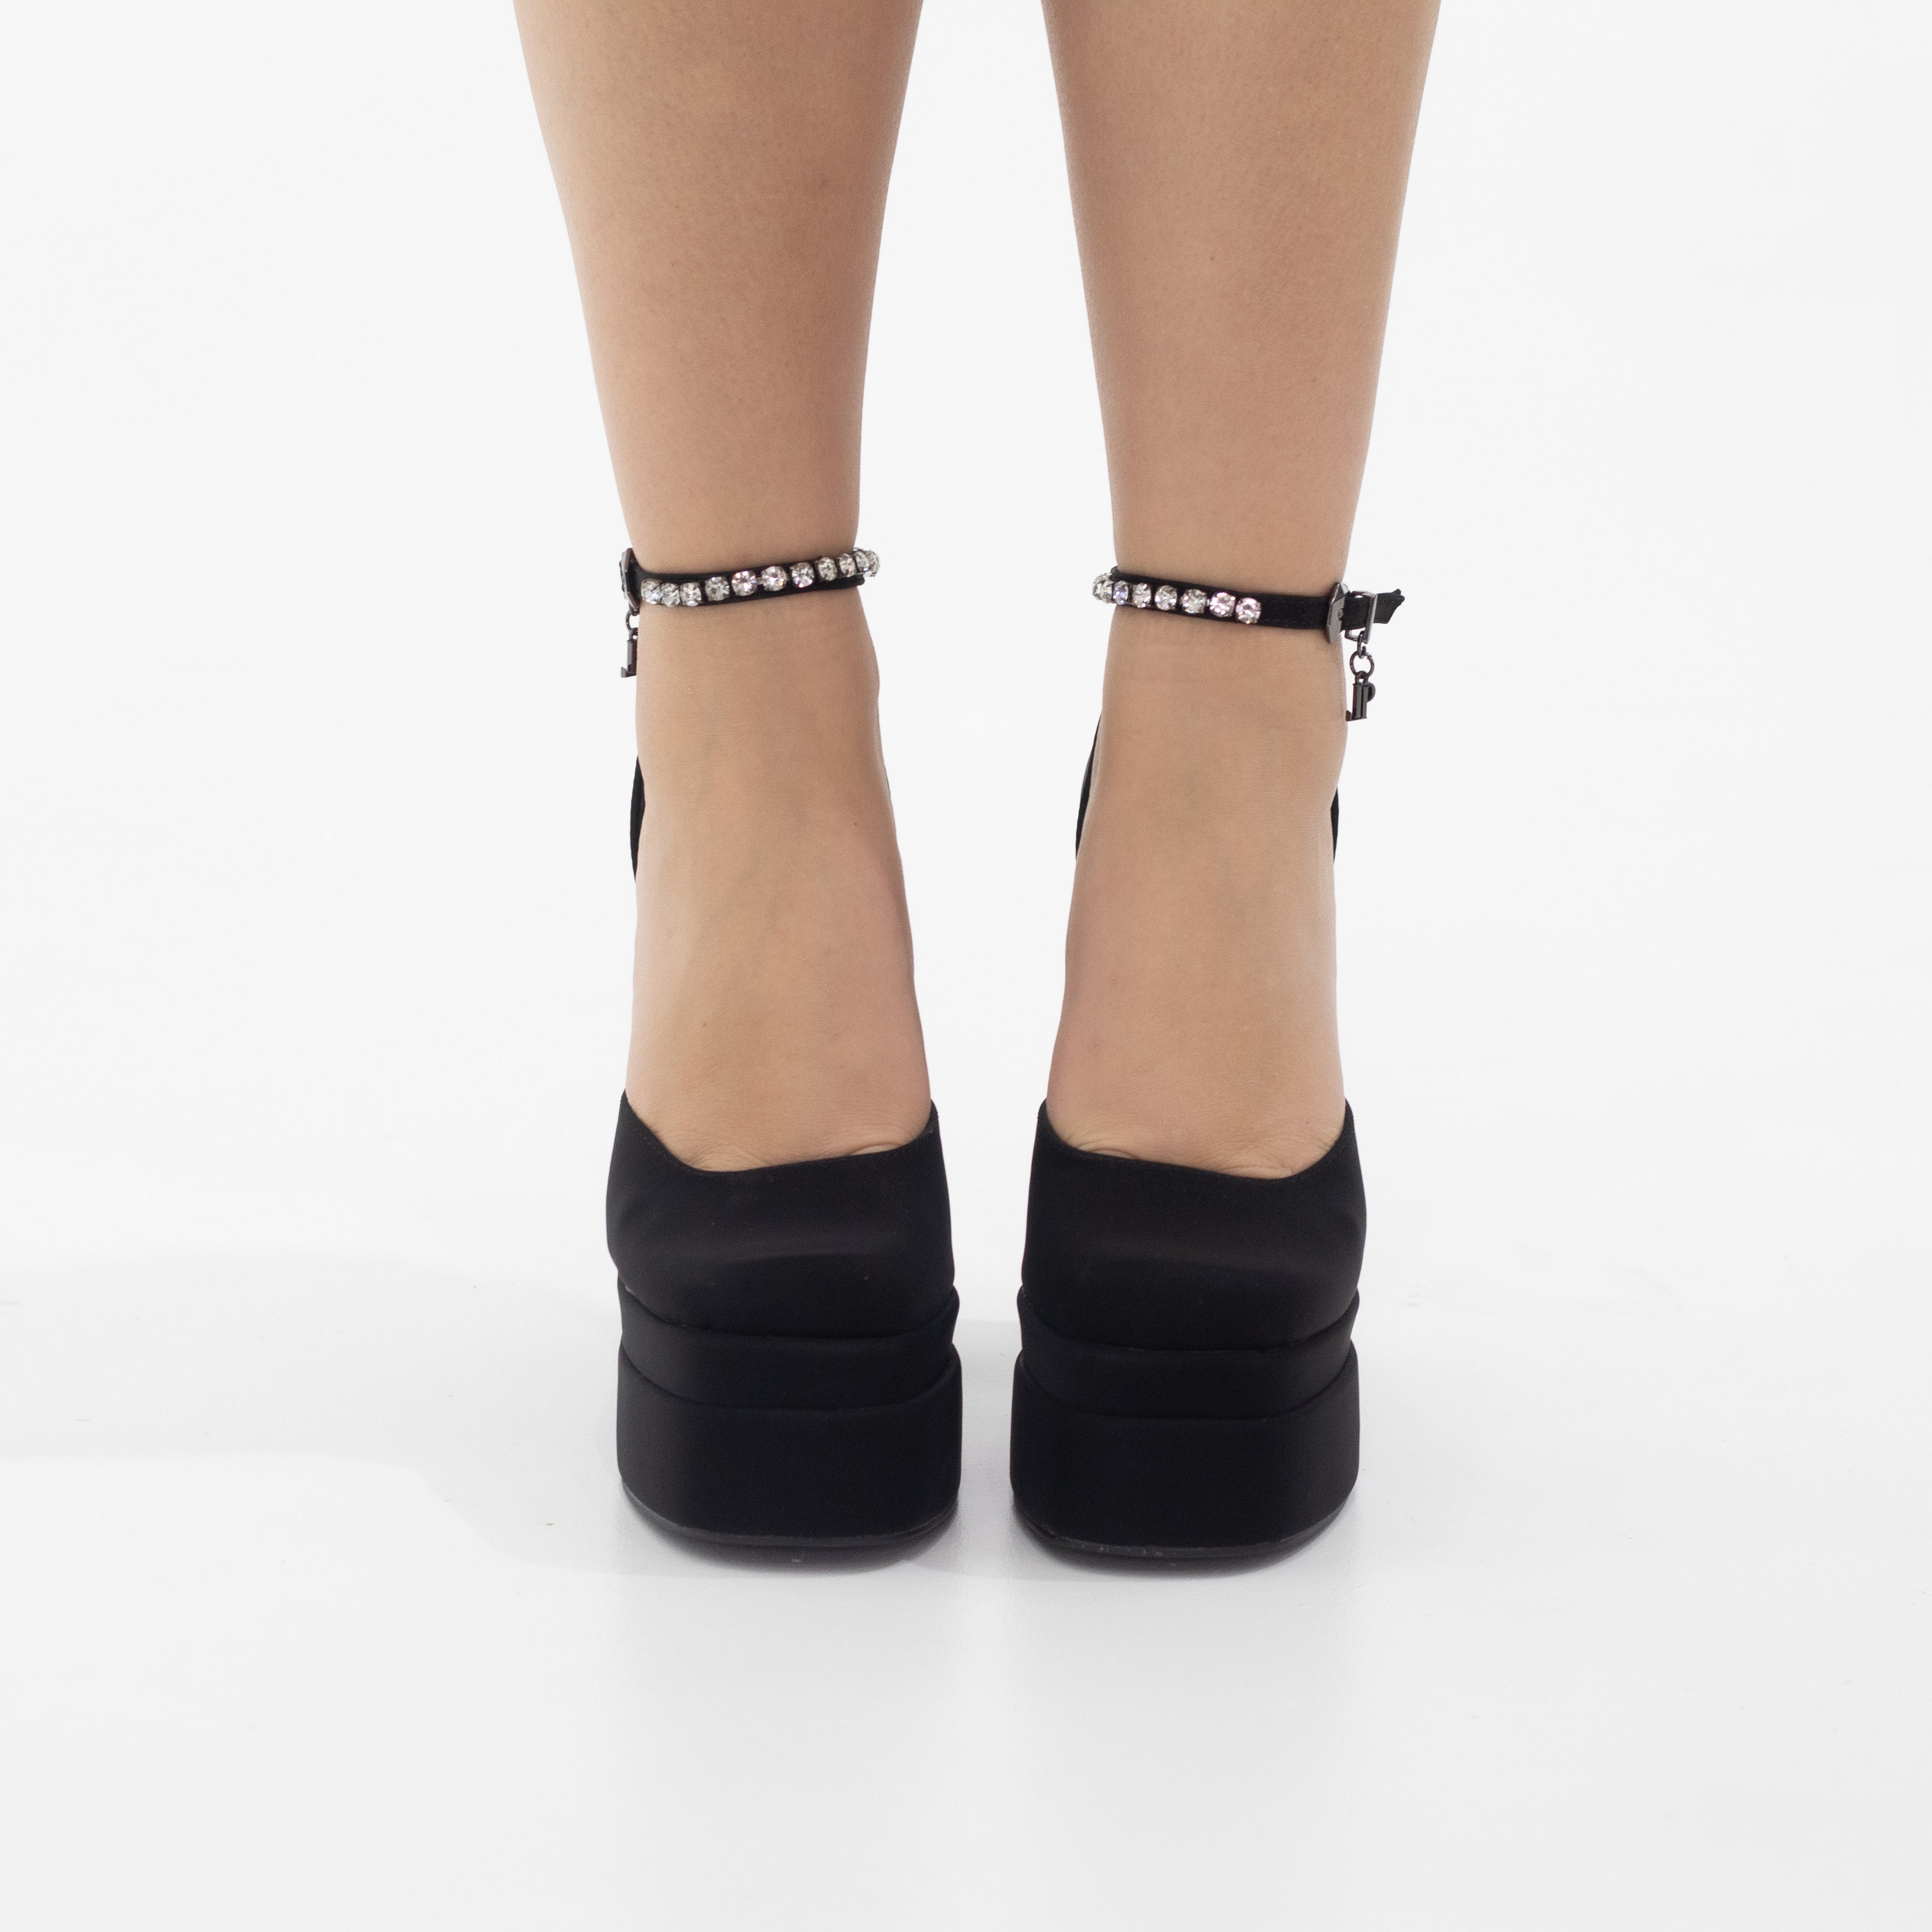 Trixie open waist 14.5cm high heel platform black